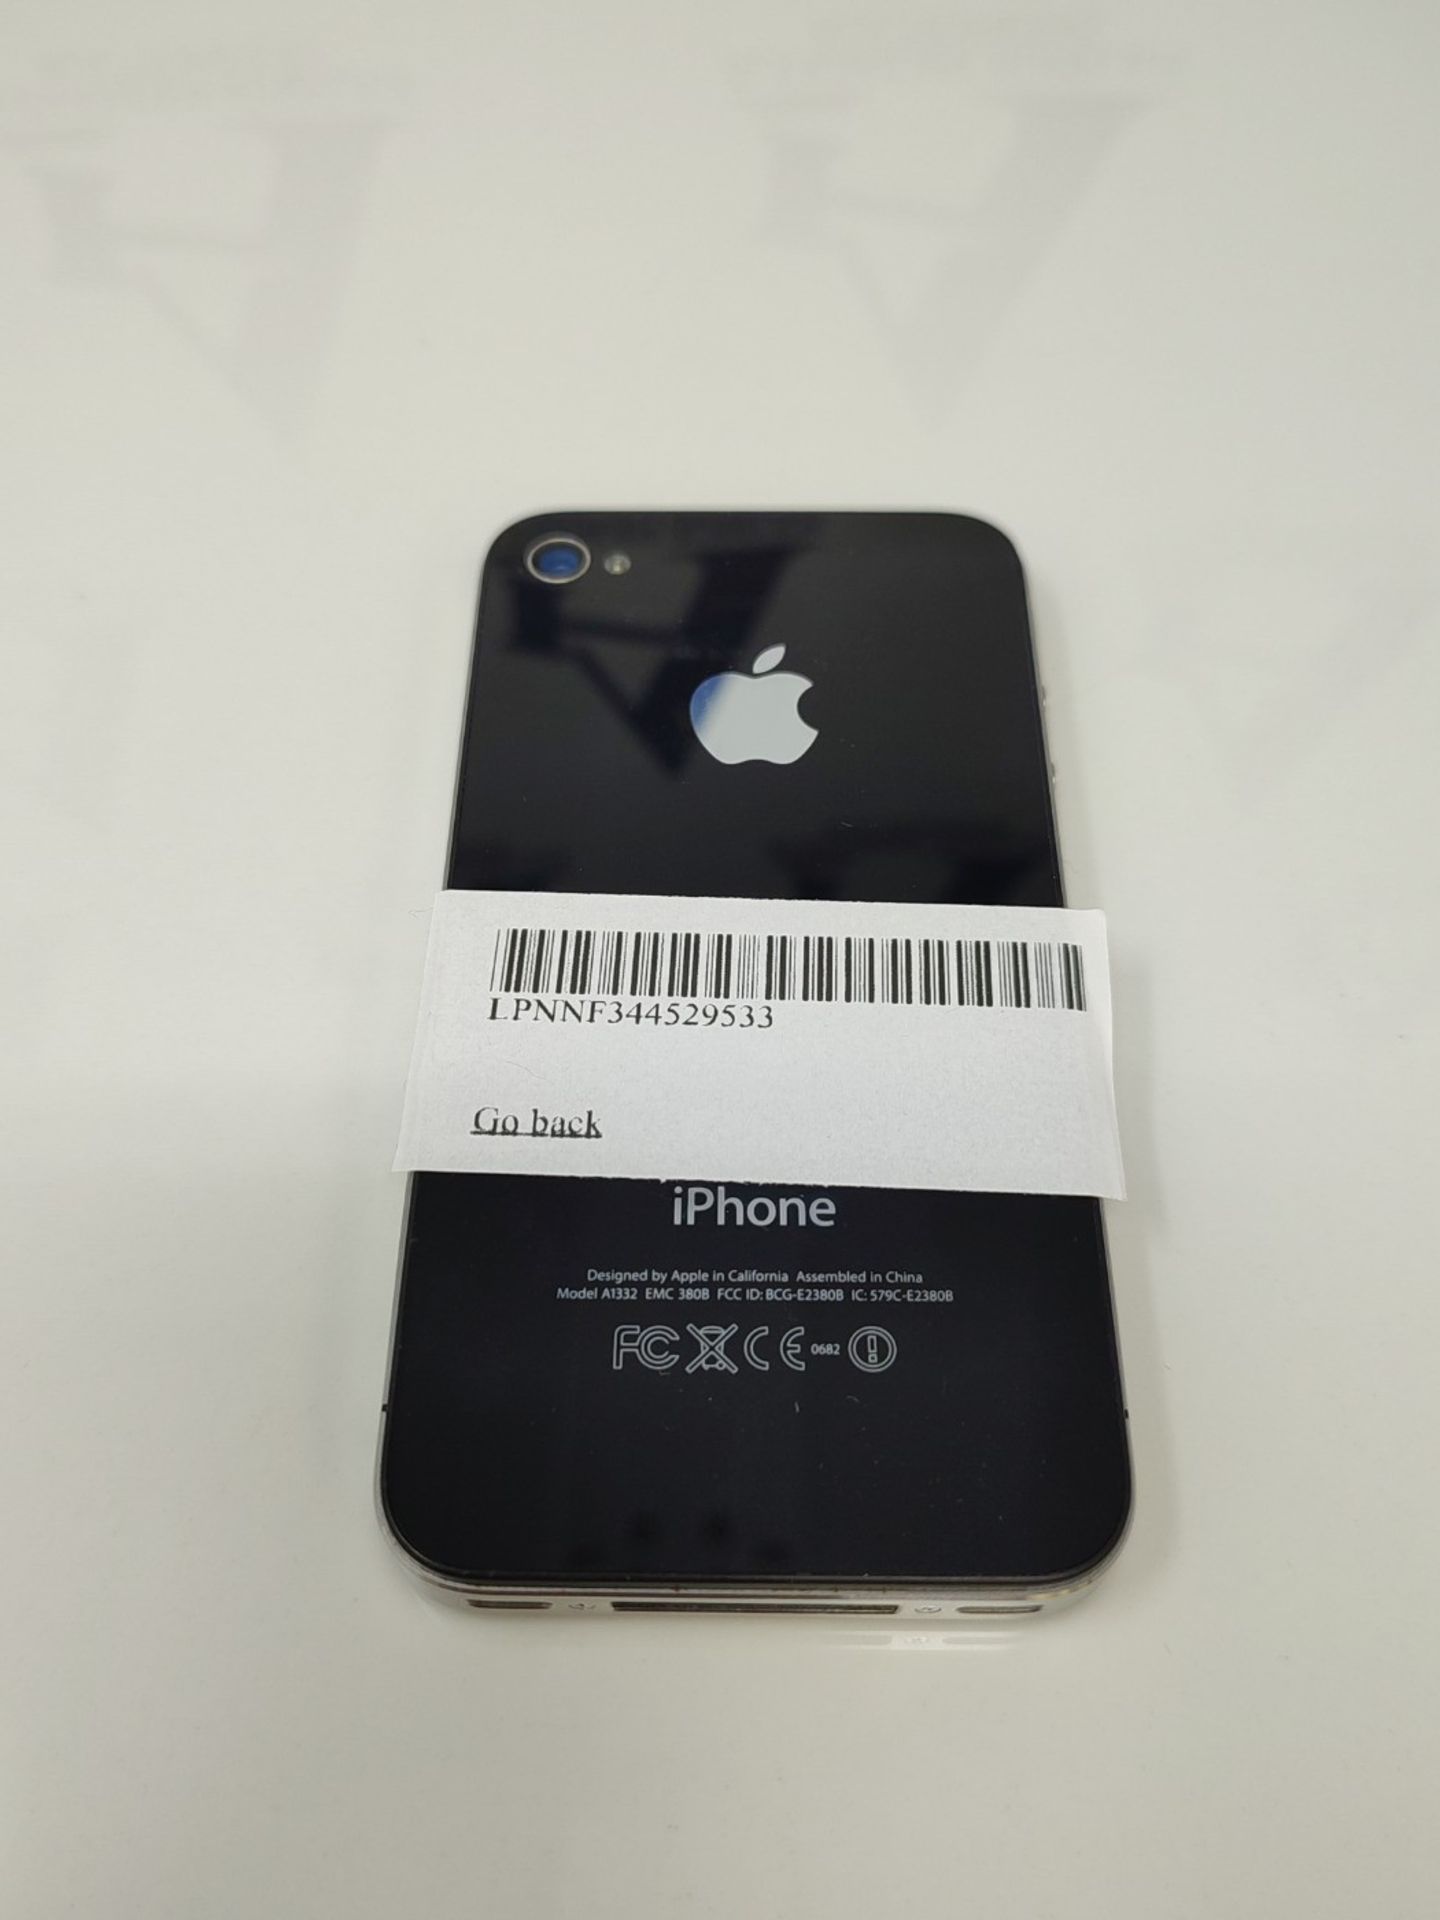 Apple iPhone 4 - 16GB - Black - Image 2 of 2